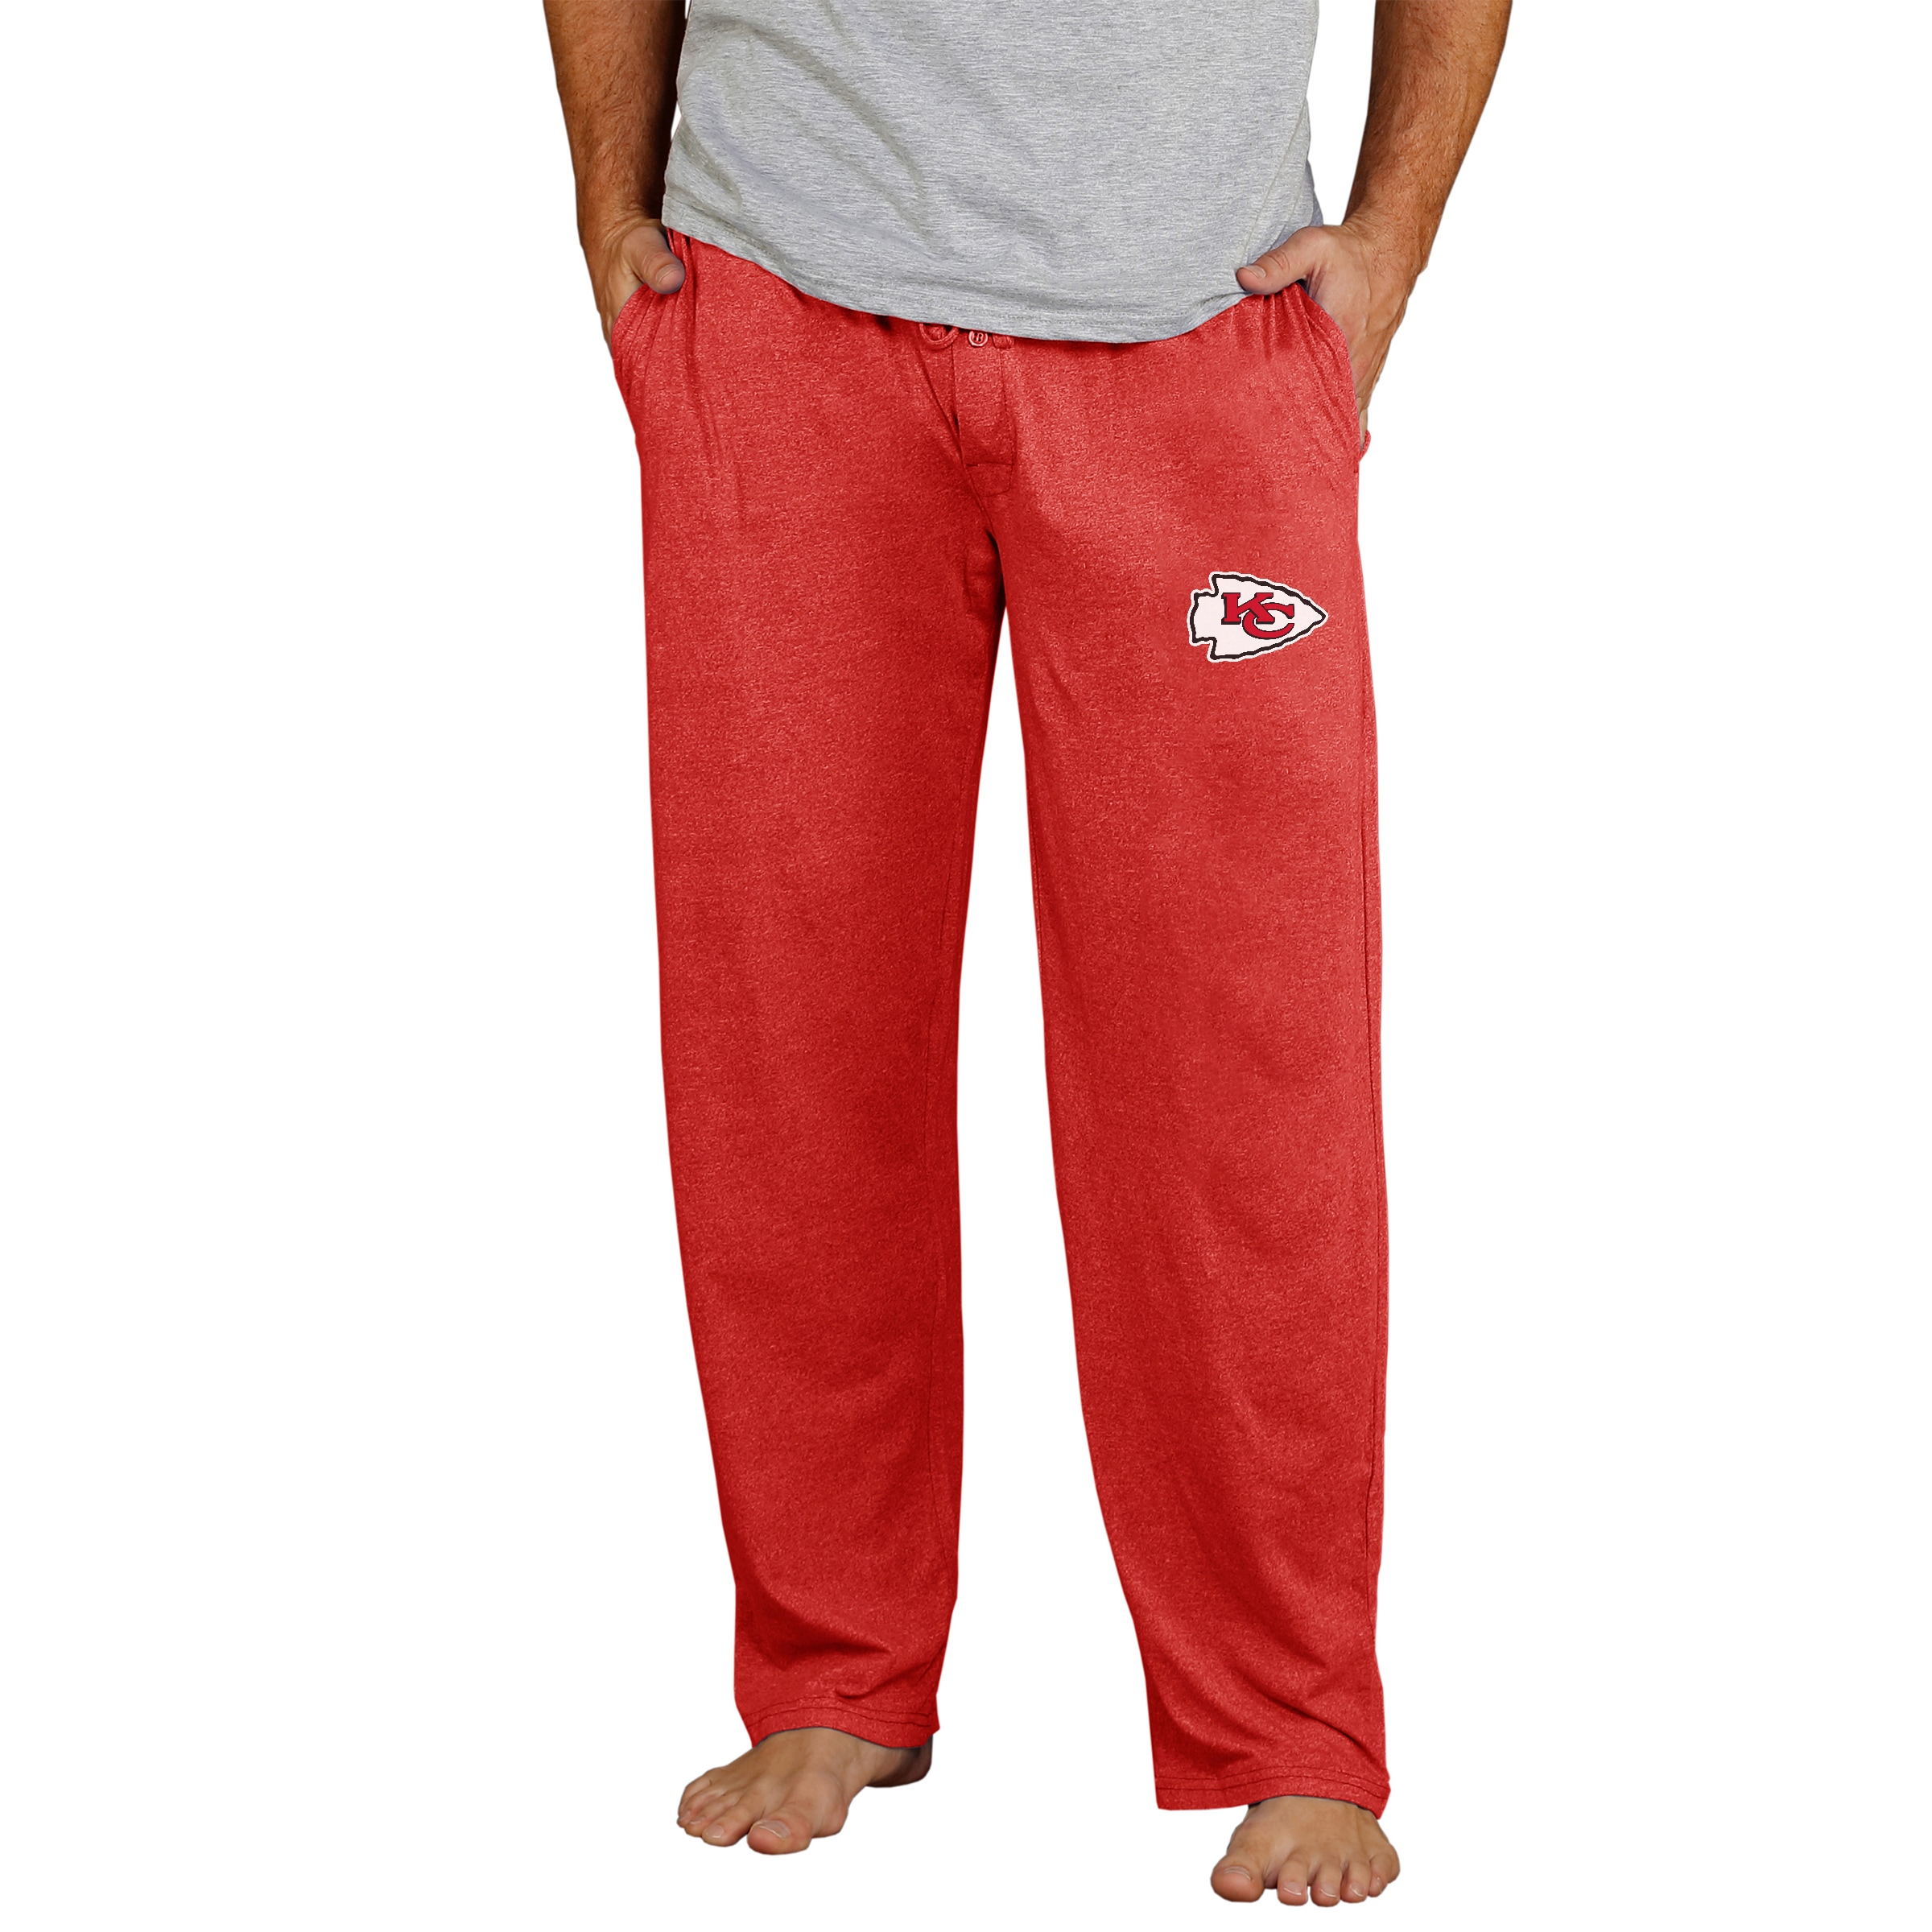 Men's Concepts Sport Red Kansas City Chiefs Lightweight Quest Knit Sleep Pants - image 1 of 1